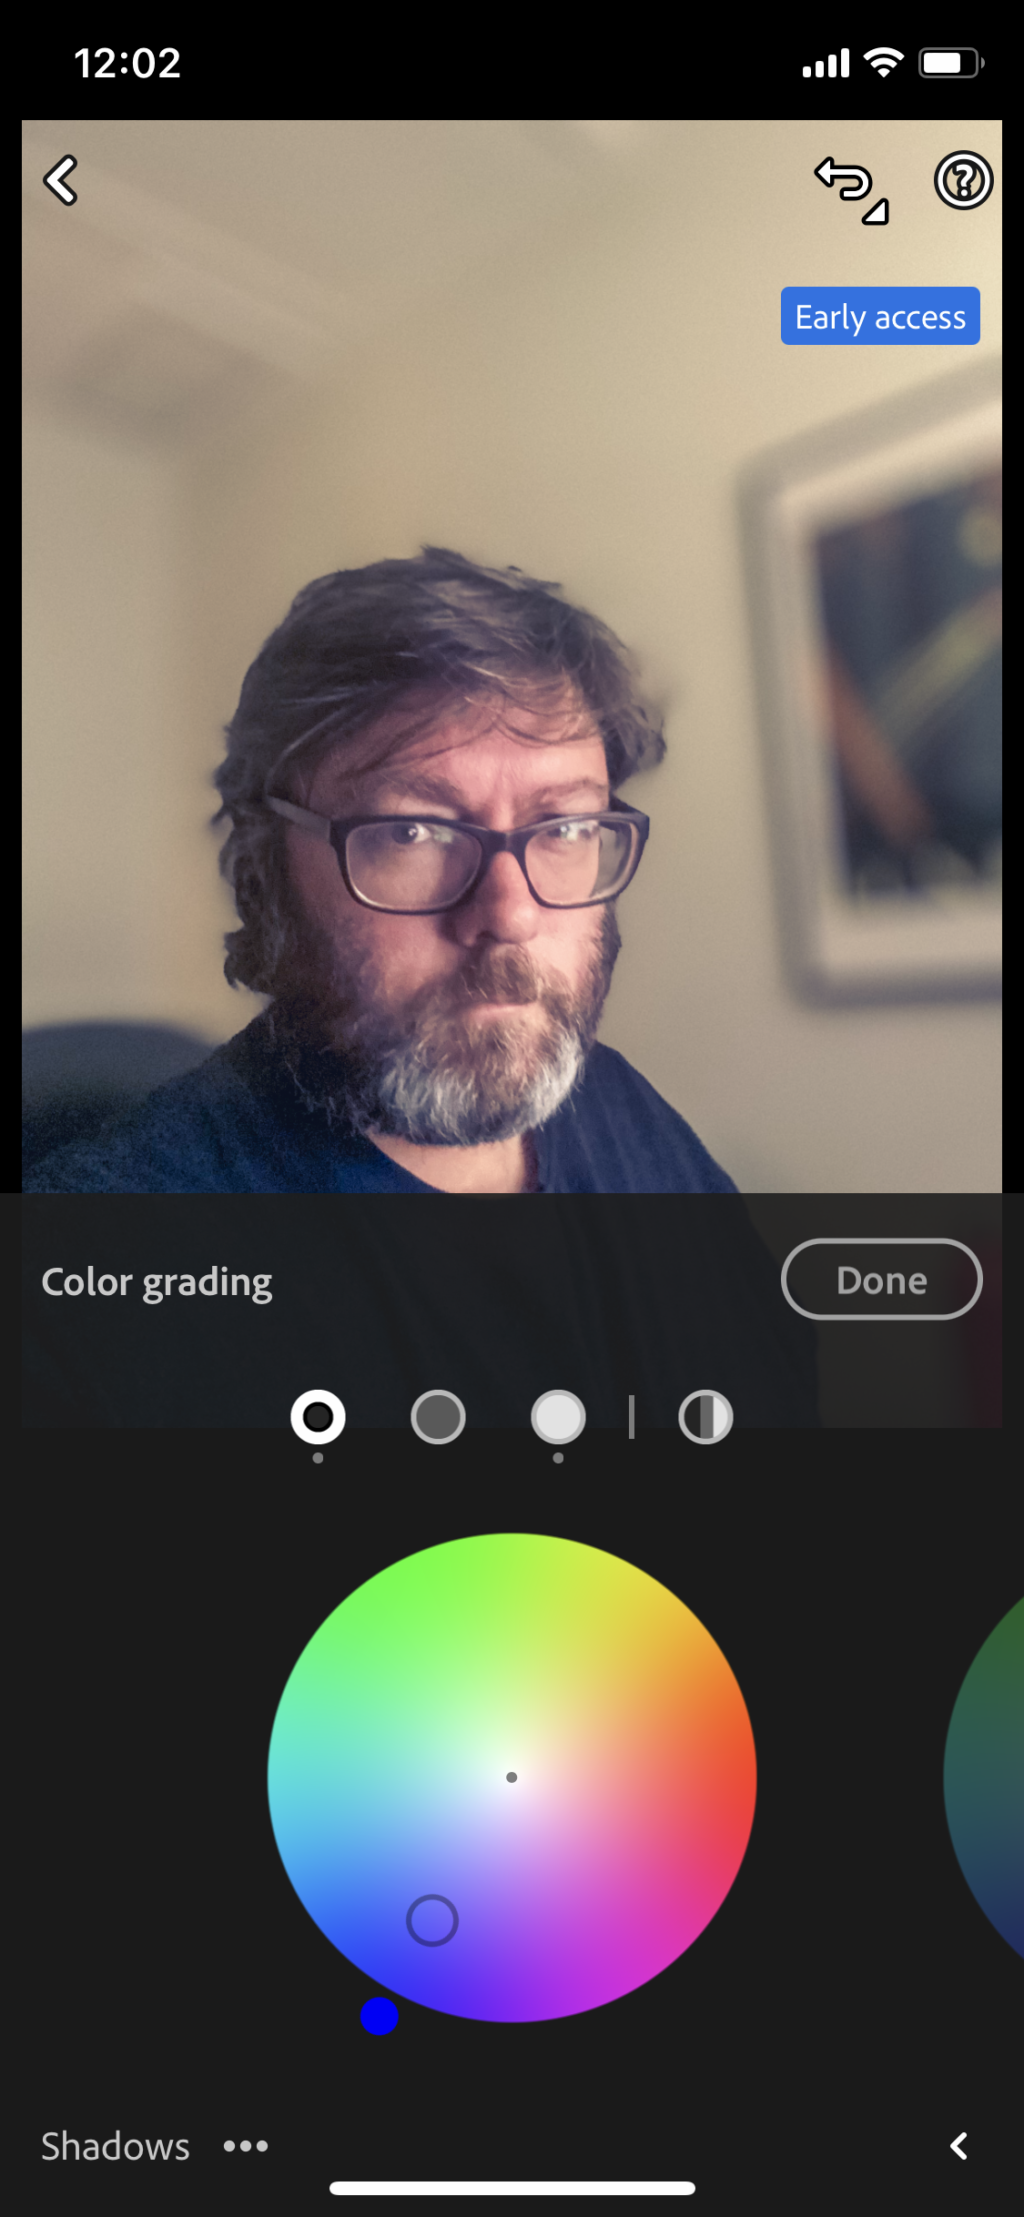 color grading a selfie - shadows